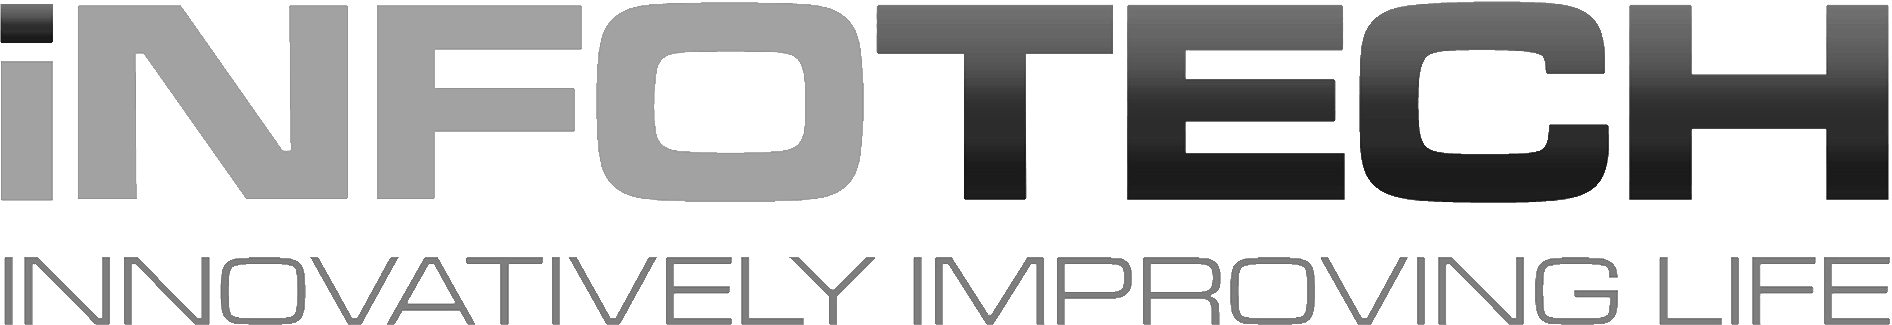 infotech-logo-grey-scale